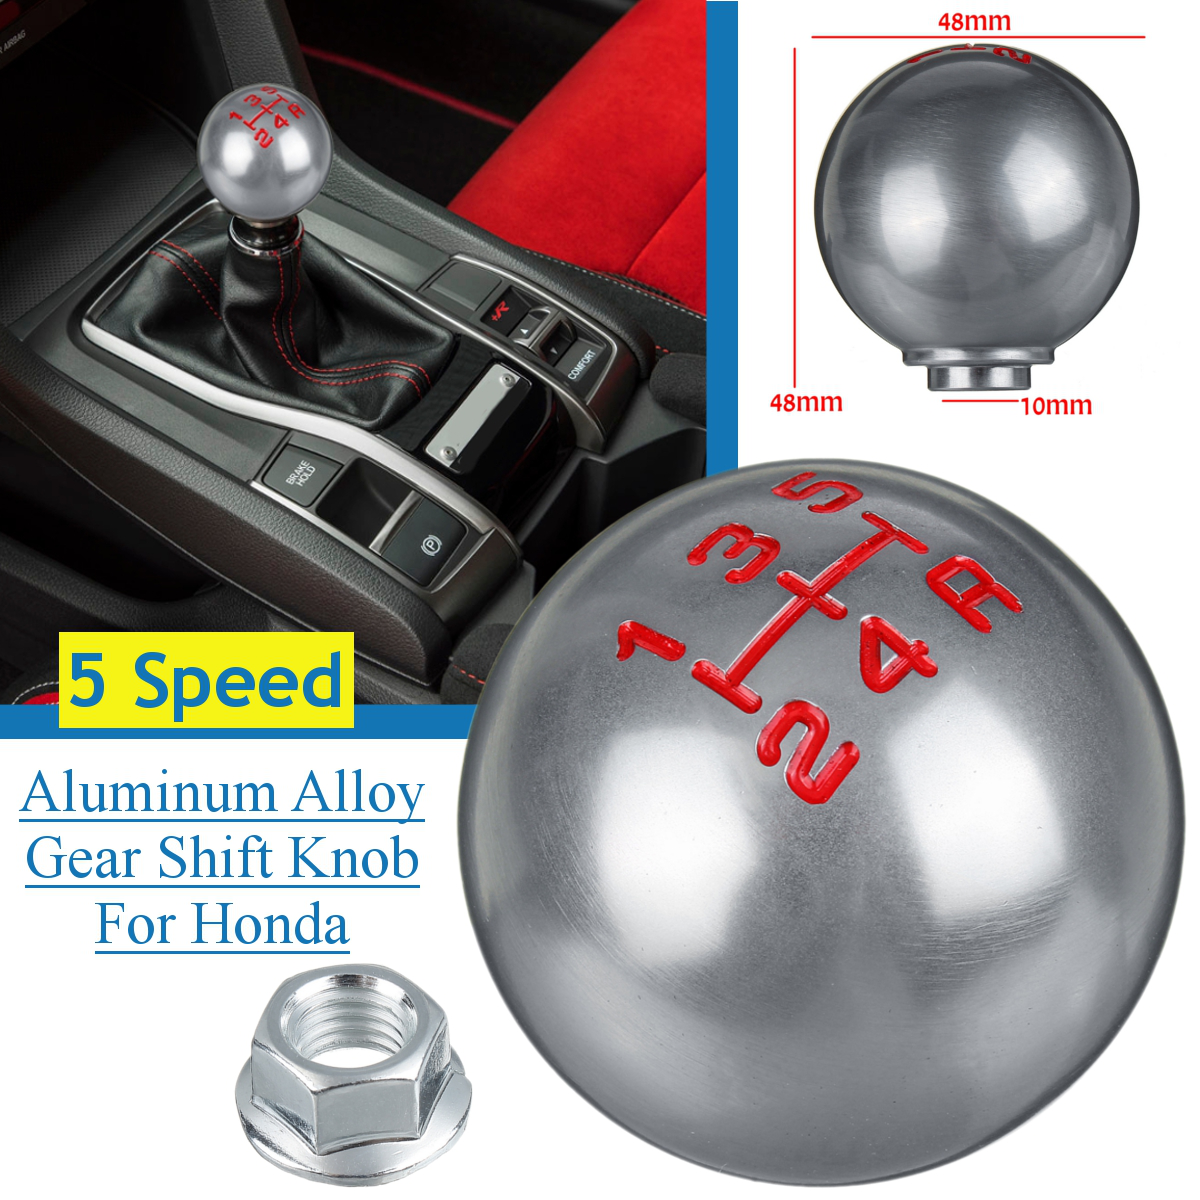 5/6 Speed Alloy Gray Gear Shift Knob round Ball Shape M10X1.5 Thread for Honda Civic City CRV - Auto GoShop